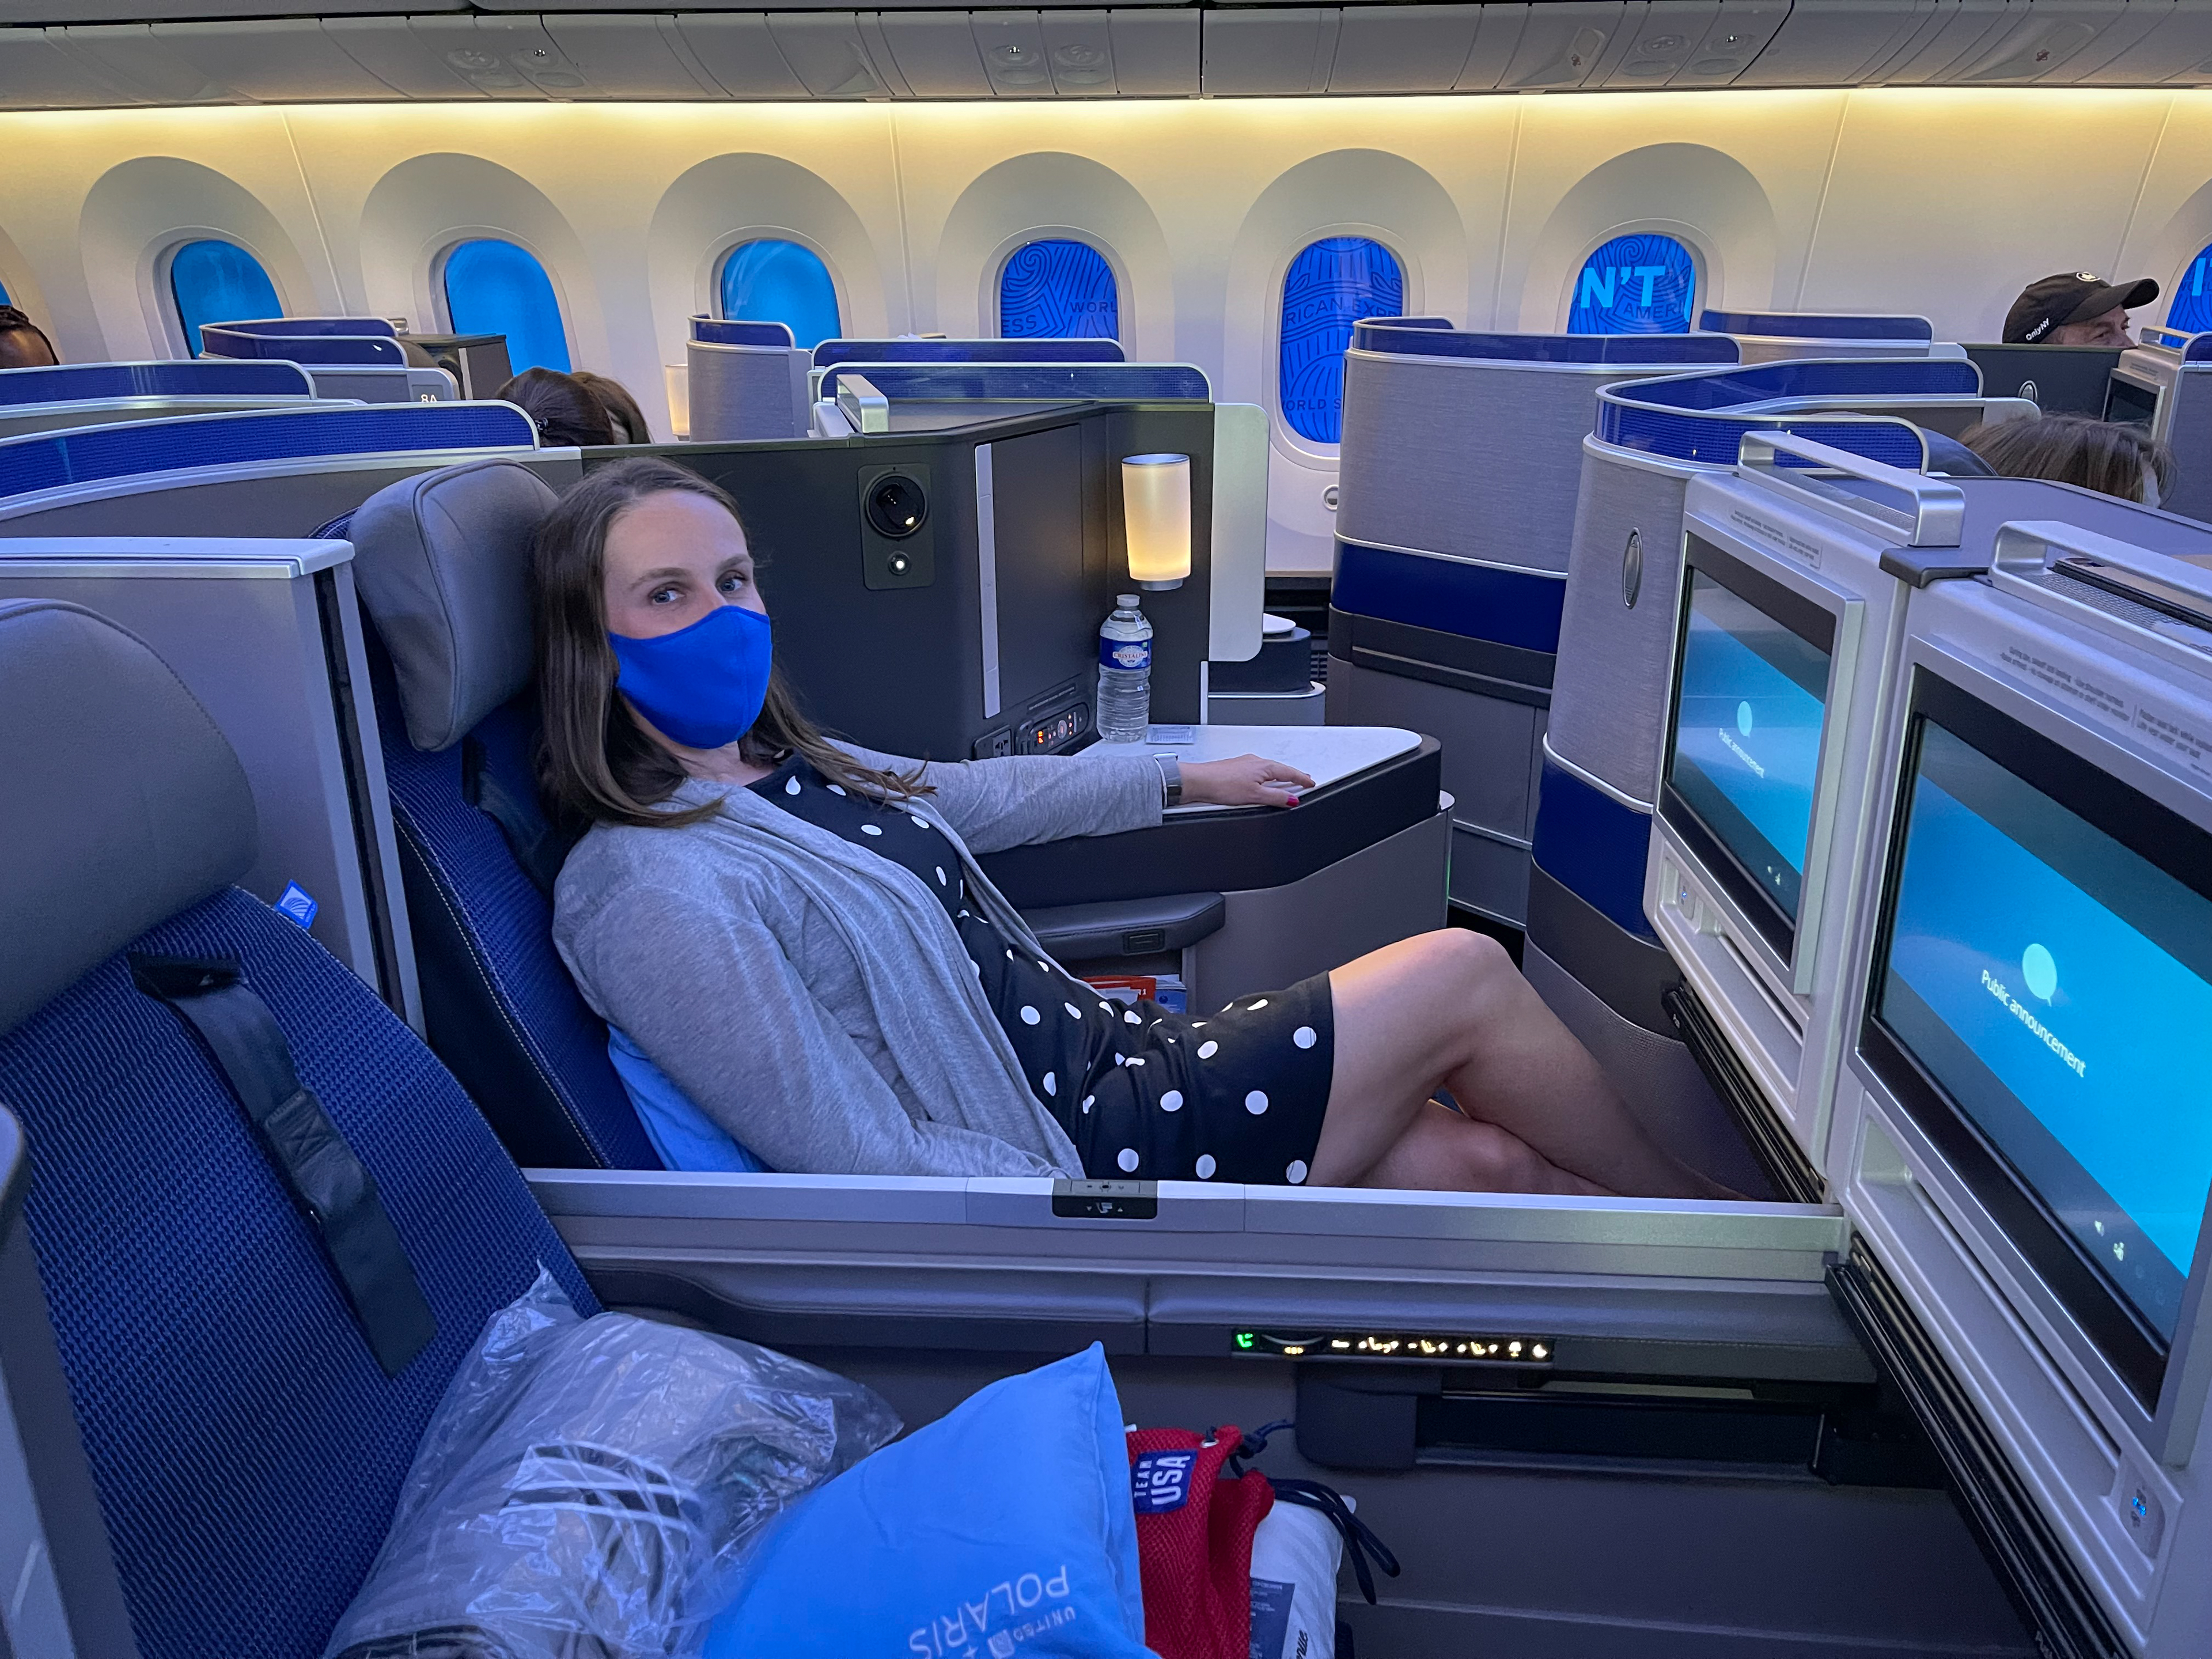 United Airlines NEW Polaris Business Class International Amenity Kit 2019